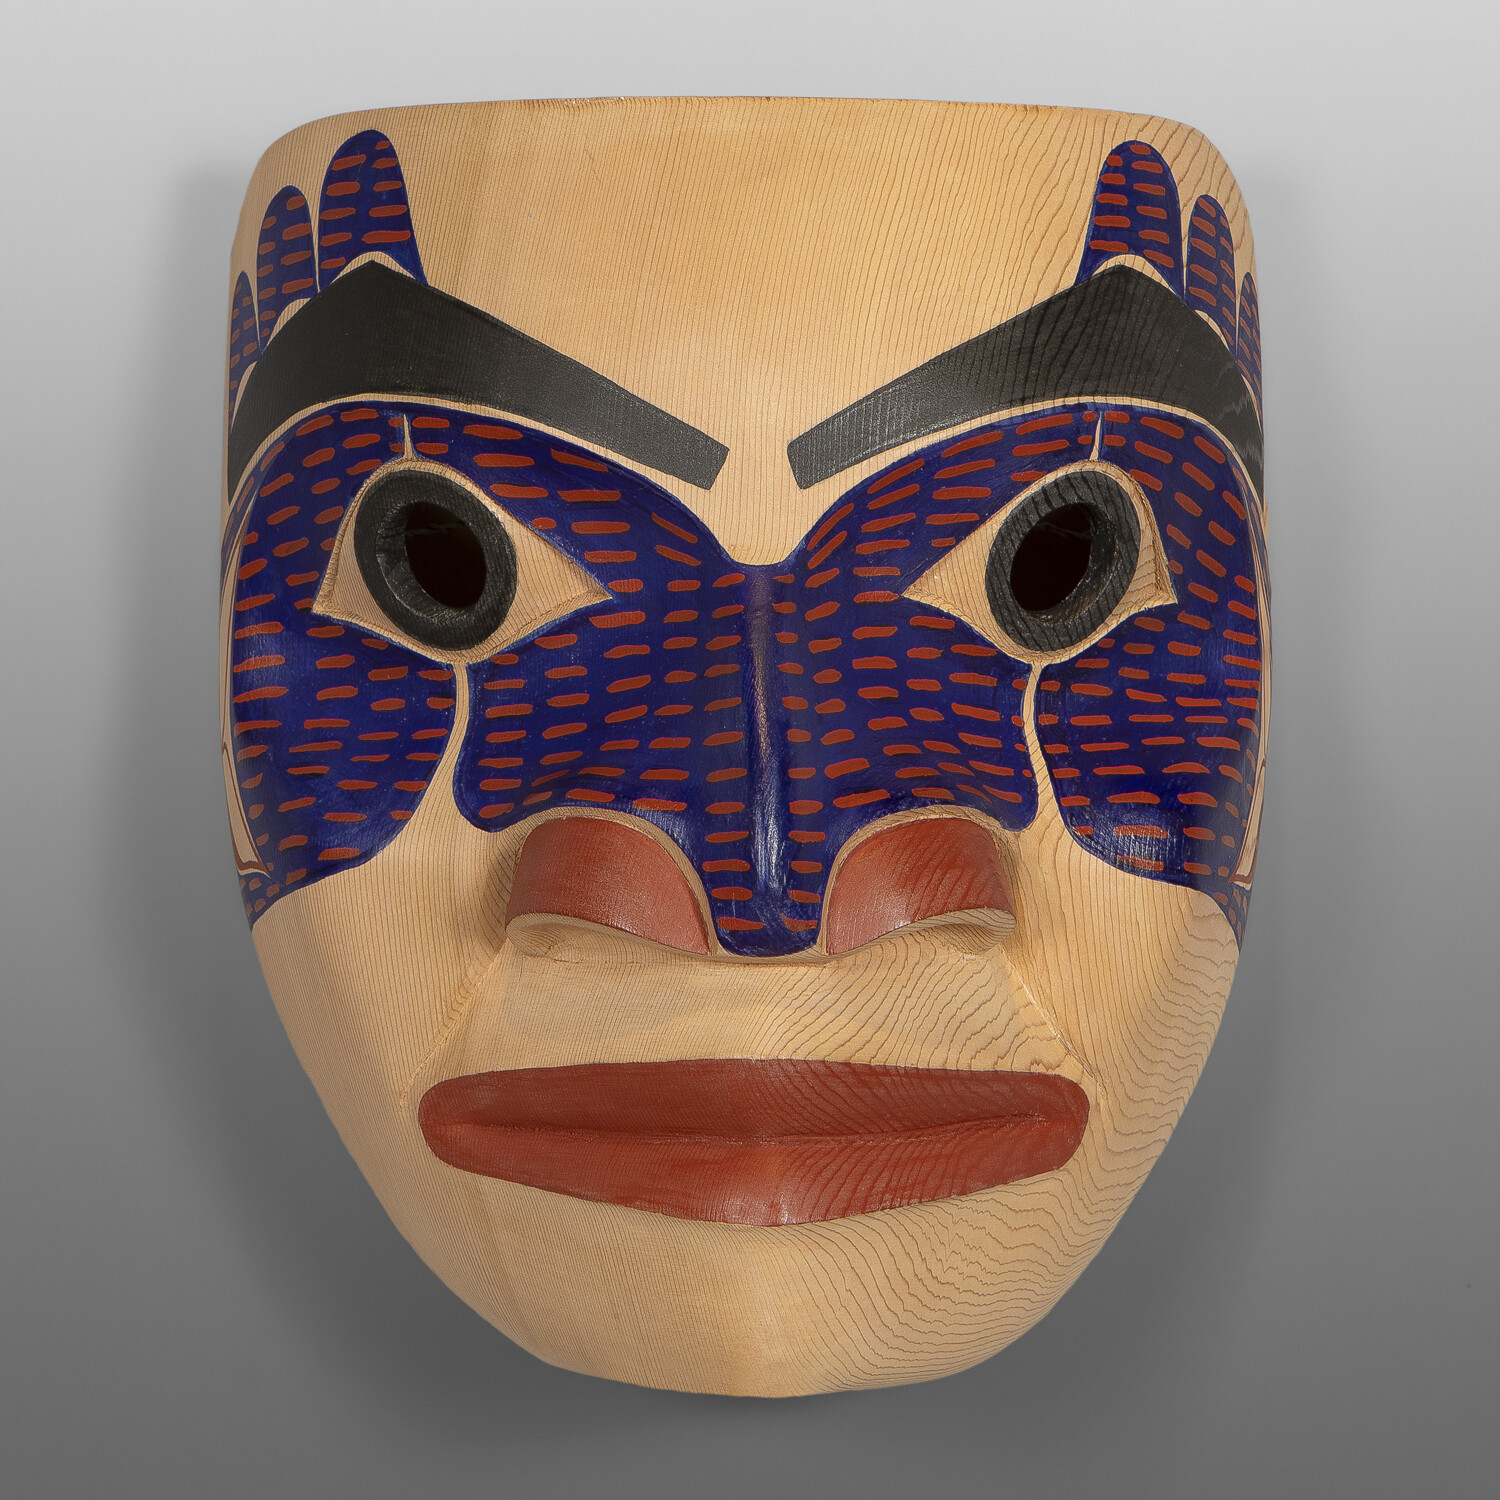 Eagle Warrior Mask
David Boxley
Tsimshian
Red cedar, paint
13½" x 11½" x 7¾”
$6000